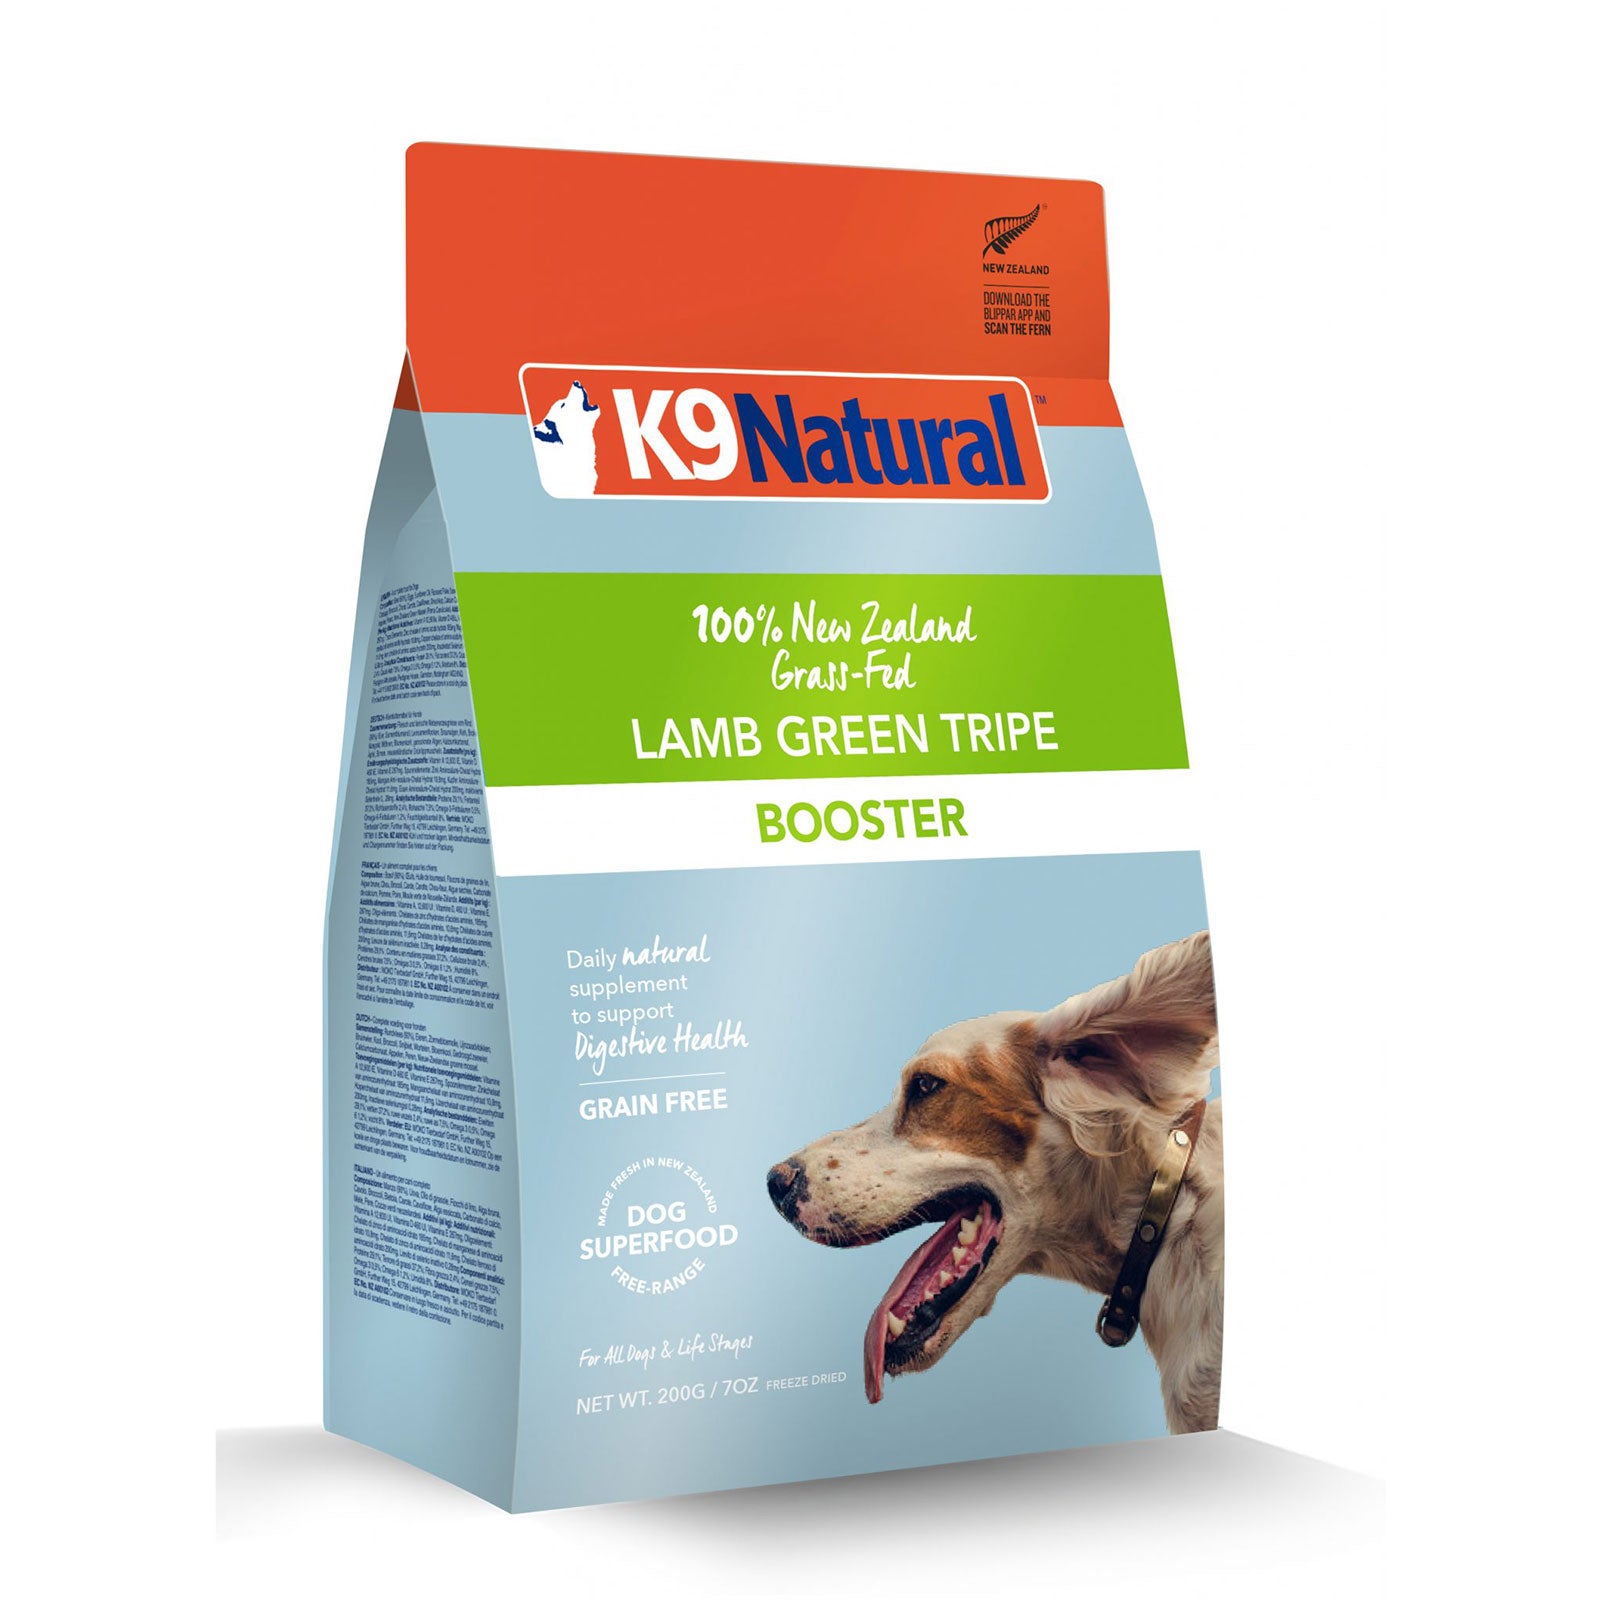 K9 Natural Dog Topper Lamb Green Tripe Booster